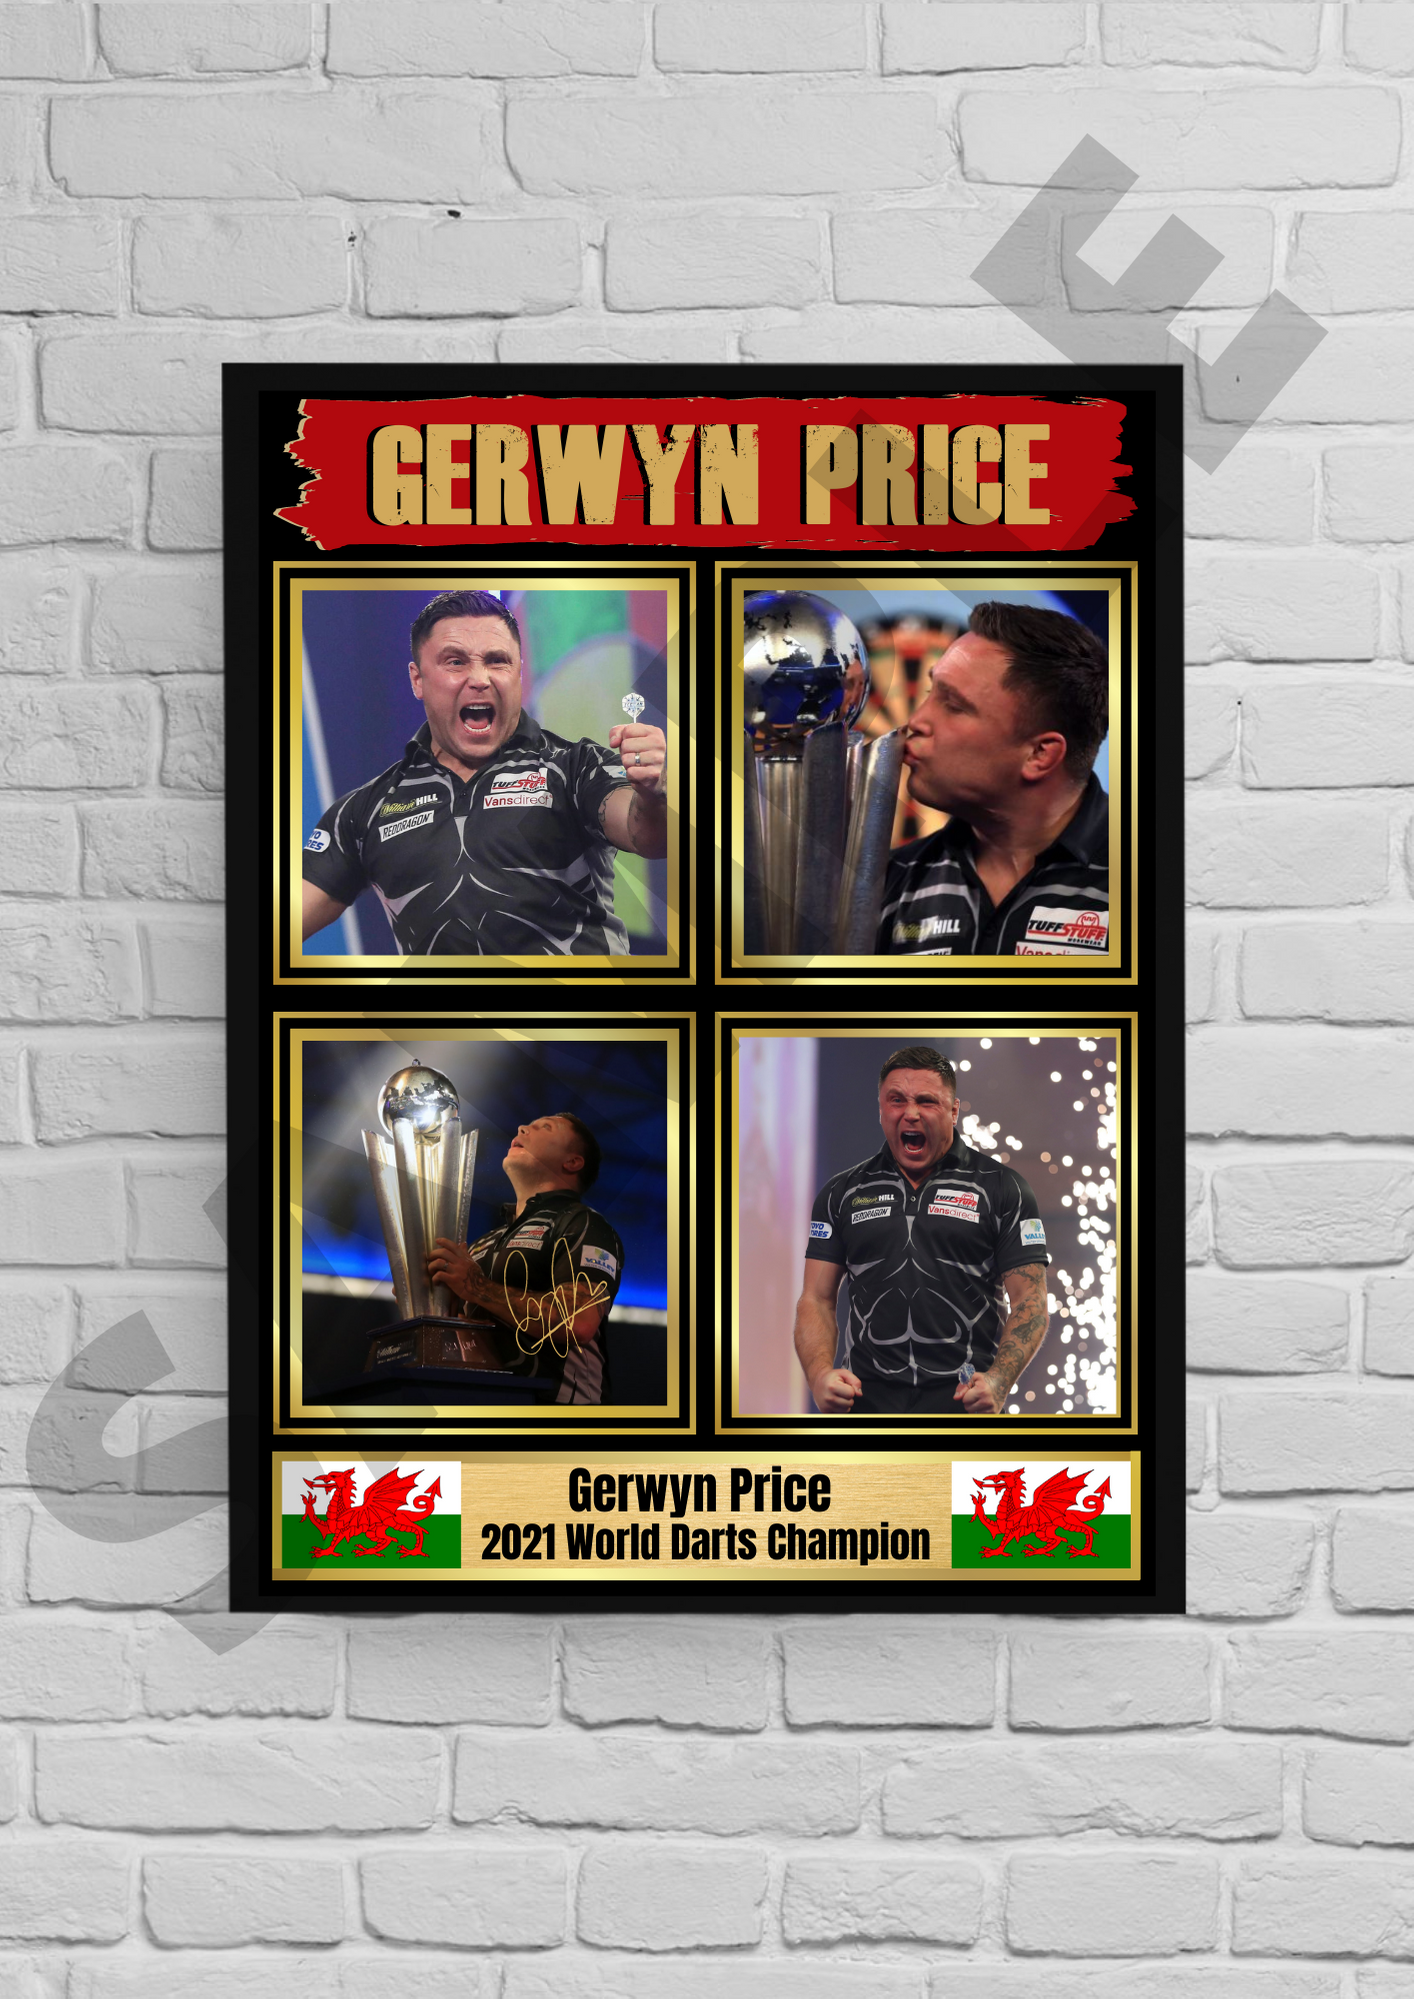 Gerwyn Price (Darts) Collectable/Memorabilia #2 - Signed print